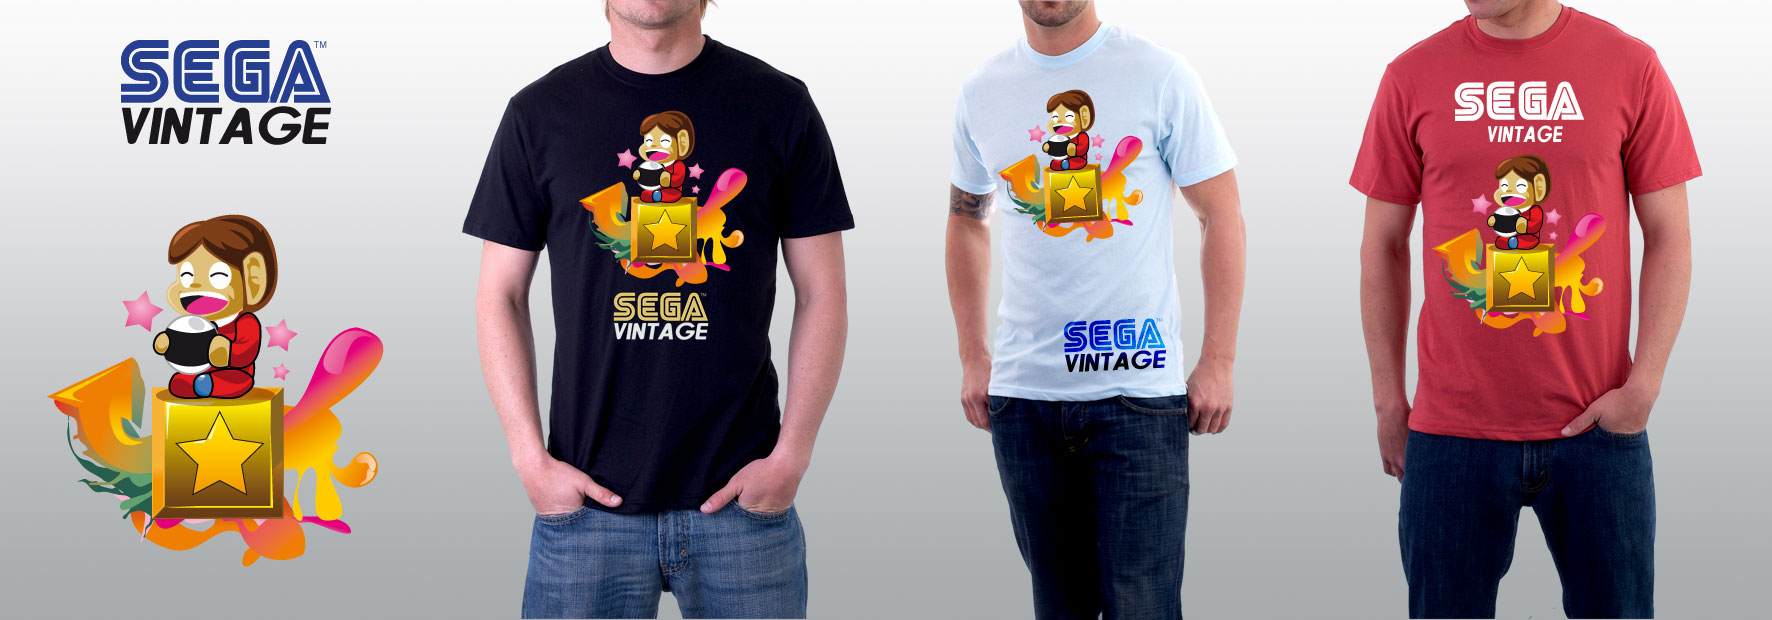 Sega vintage T-Shirt